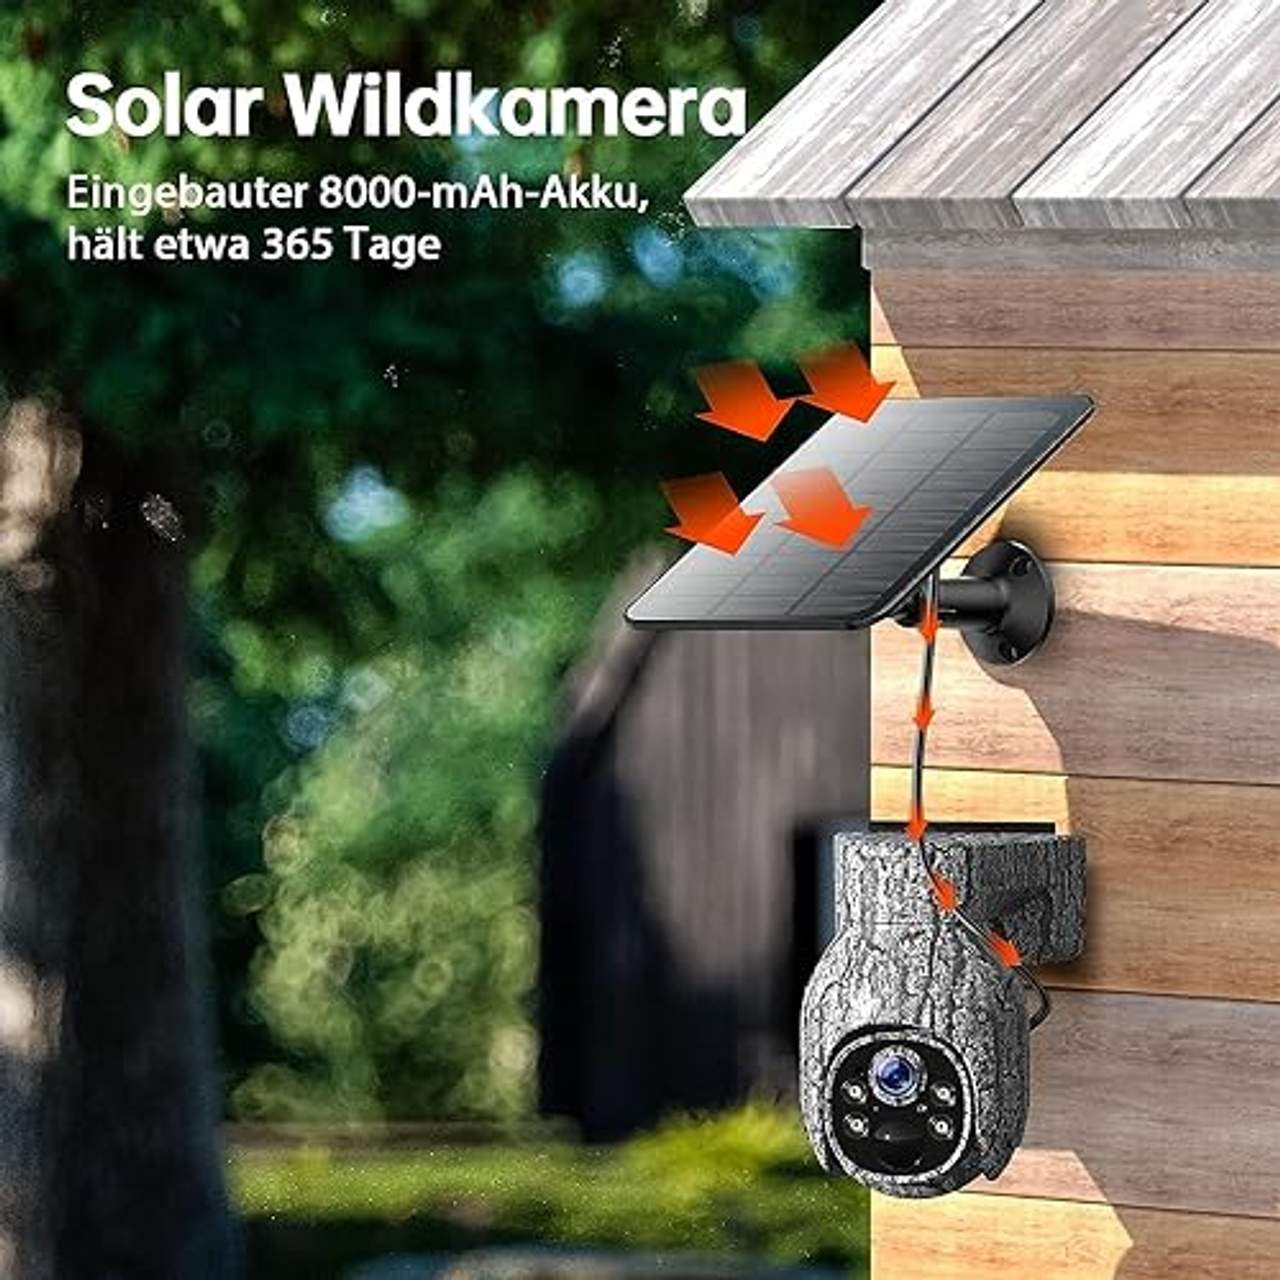 4G LTE Wildkamera Solar